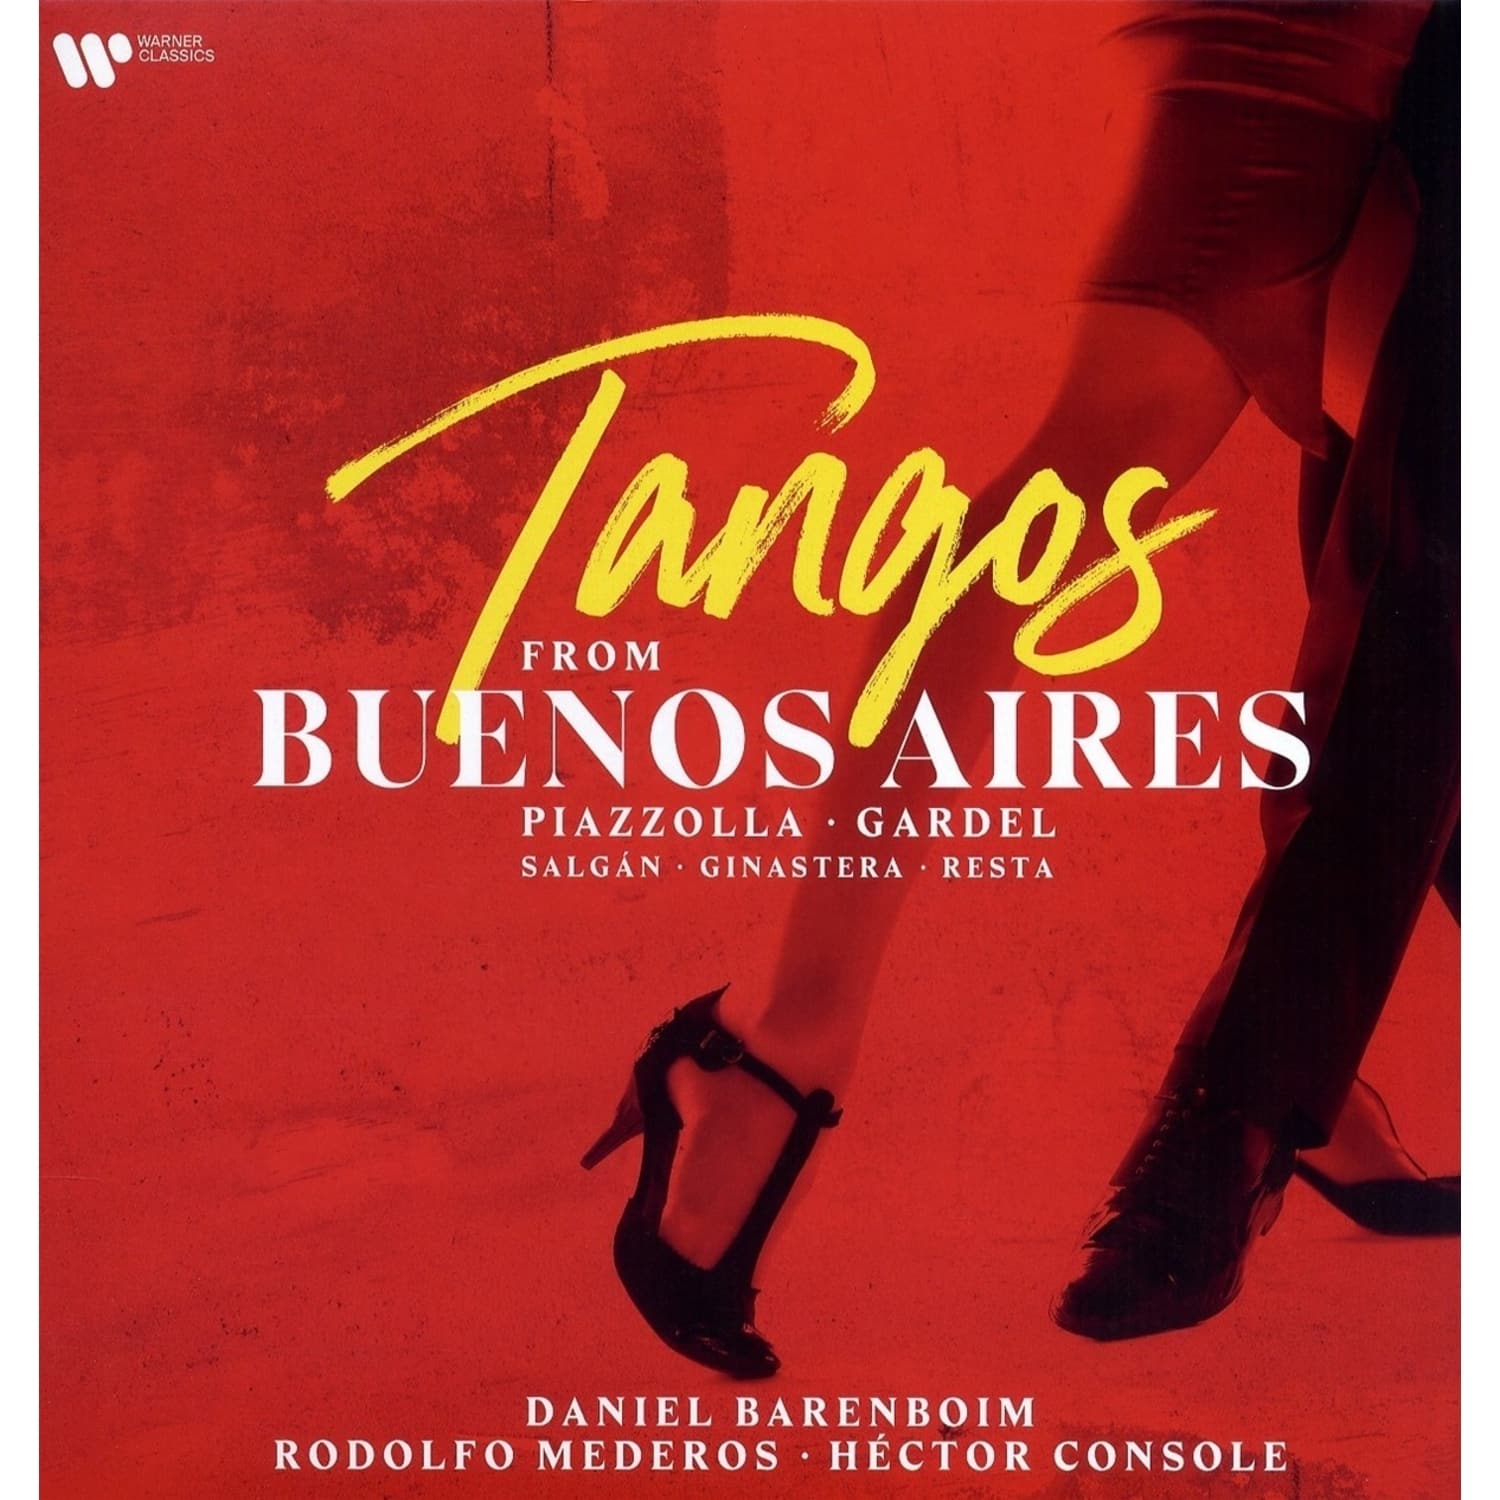 Daniel Barenboim / Rodolfo Mederos / Hector Console - TANGOS FROM BUENOS AIRES 